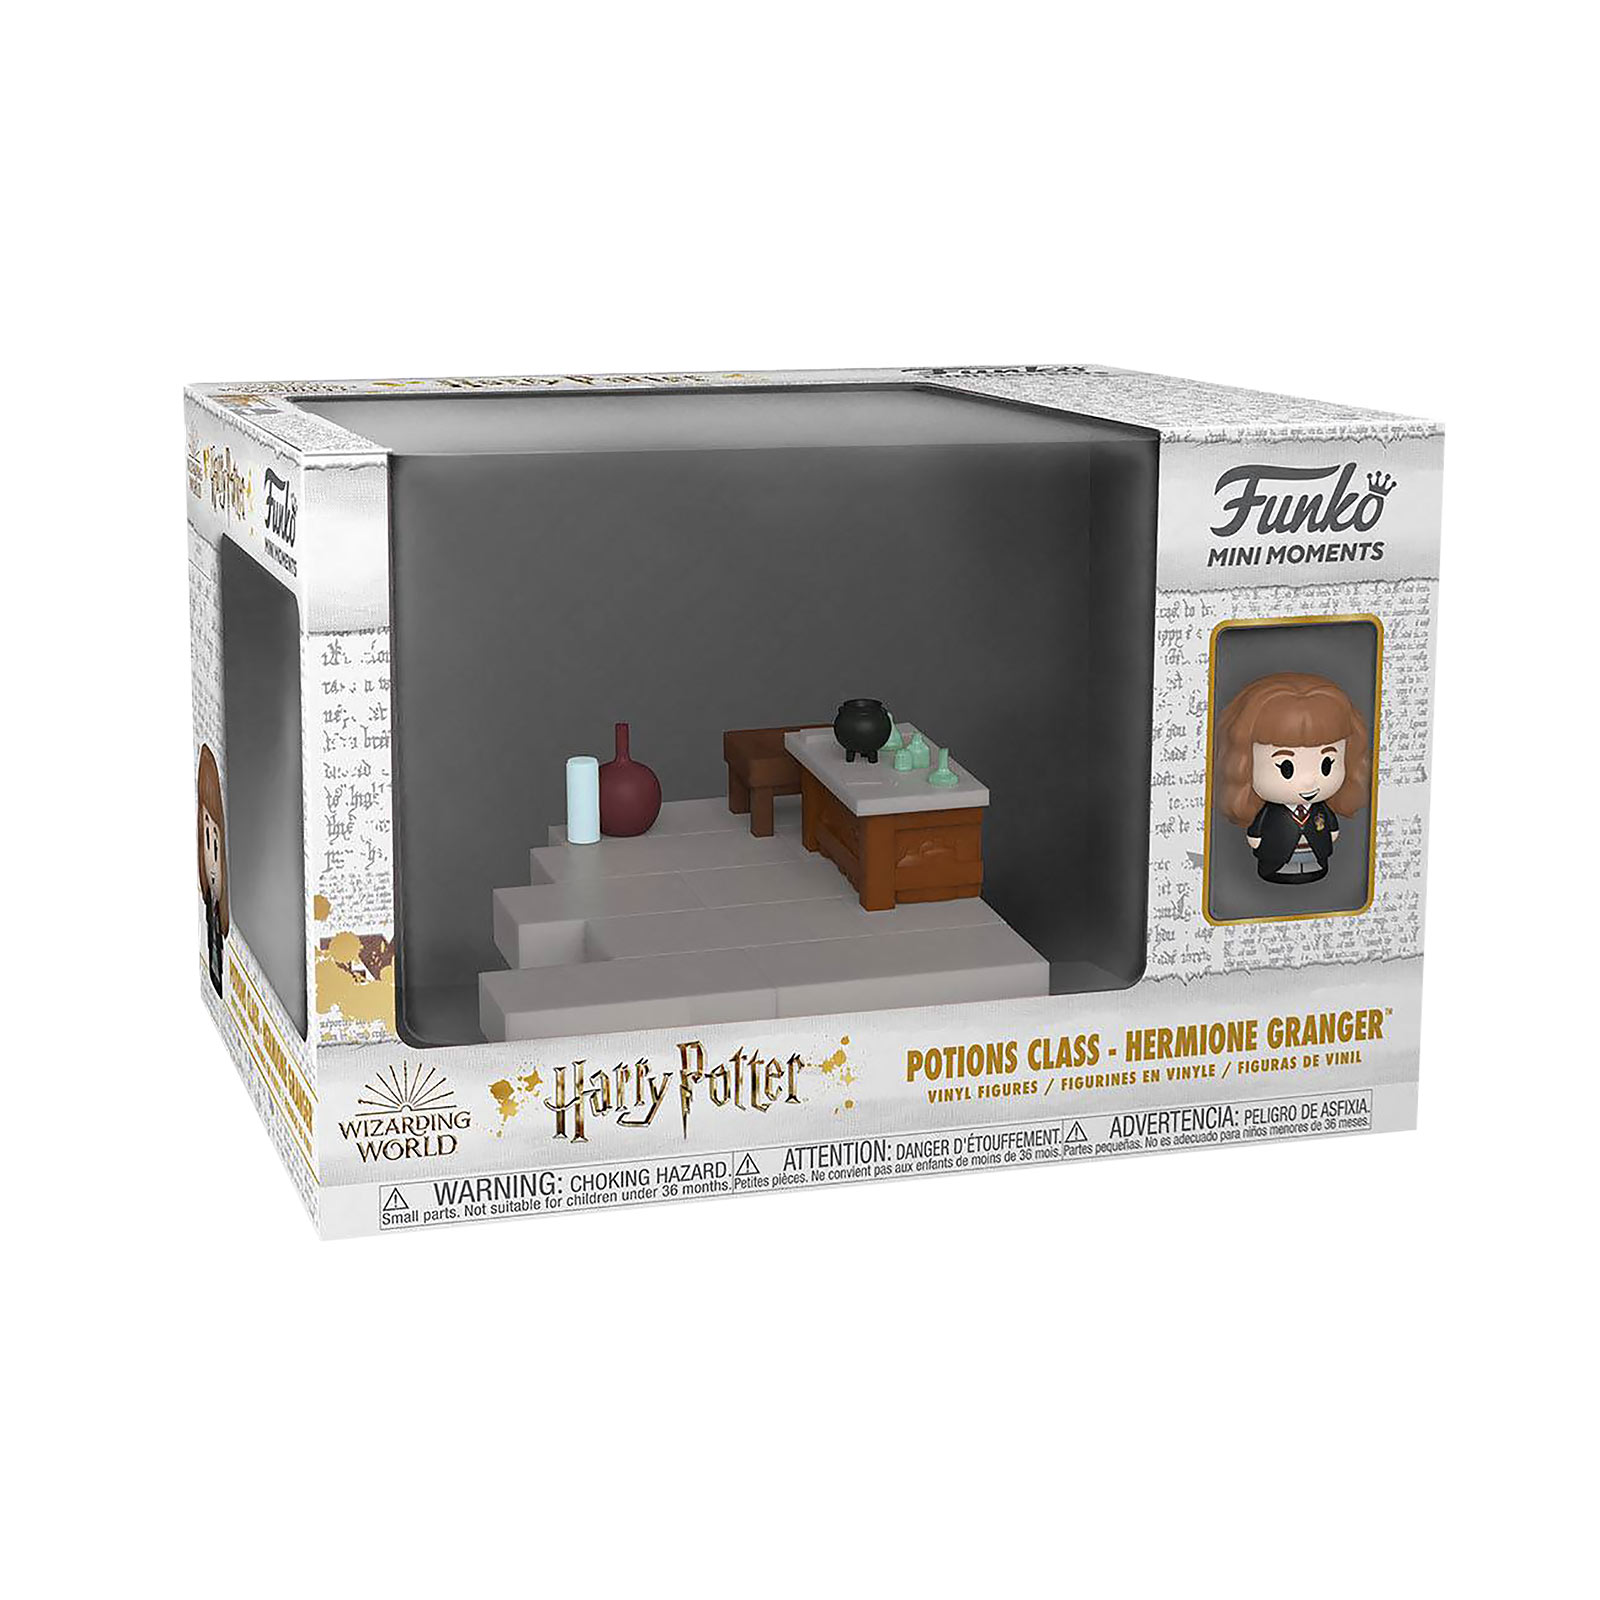 Hermione Granger Potion Class Funko Pop Mini Moments Figure - Harry Potter